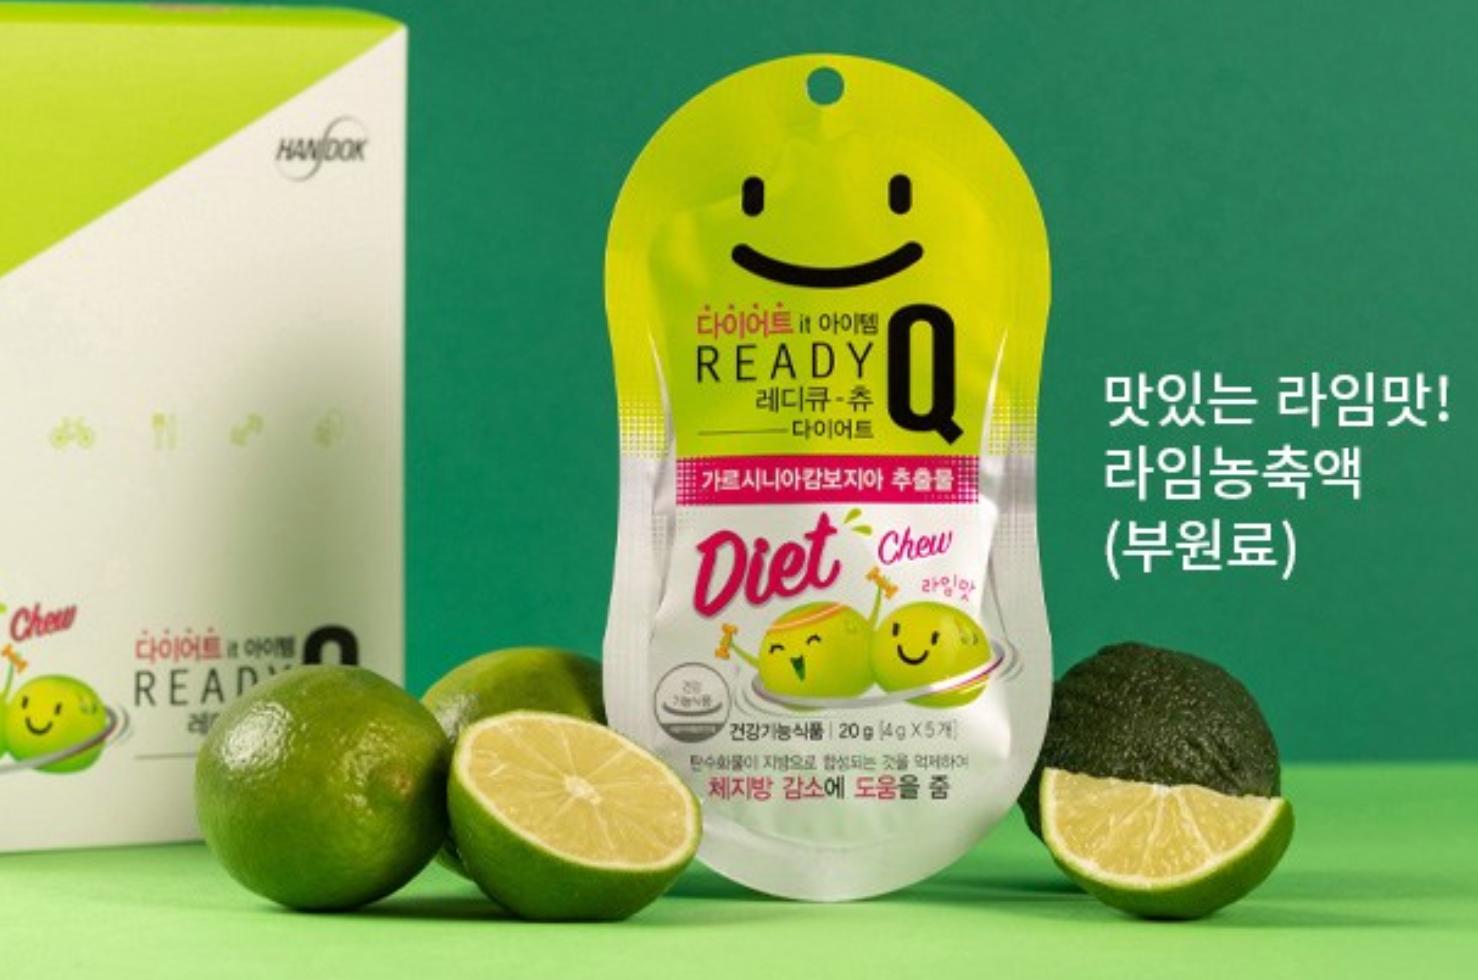 korean brand ready Q's diet chew ad in korean